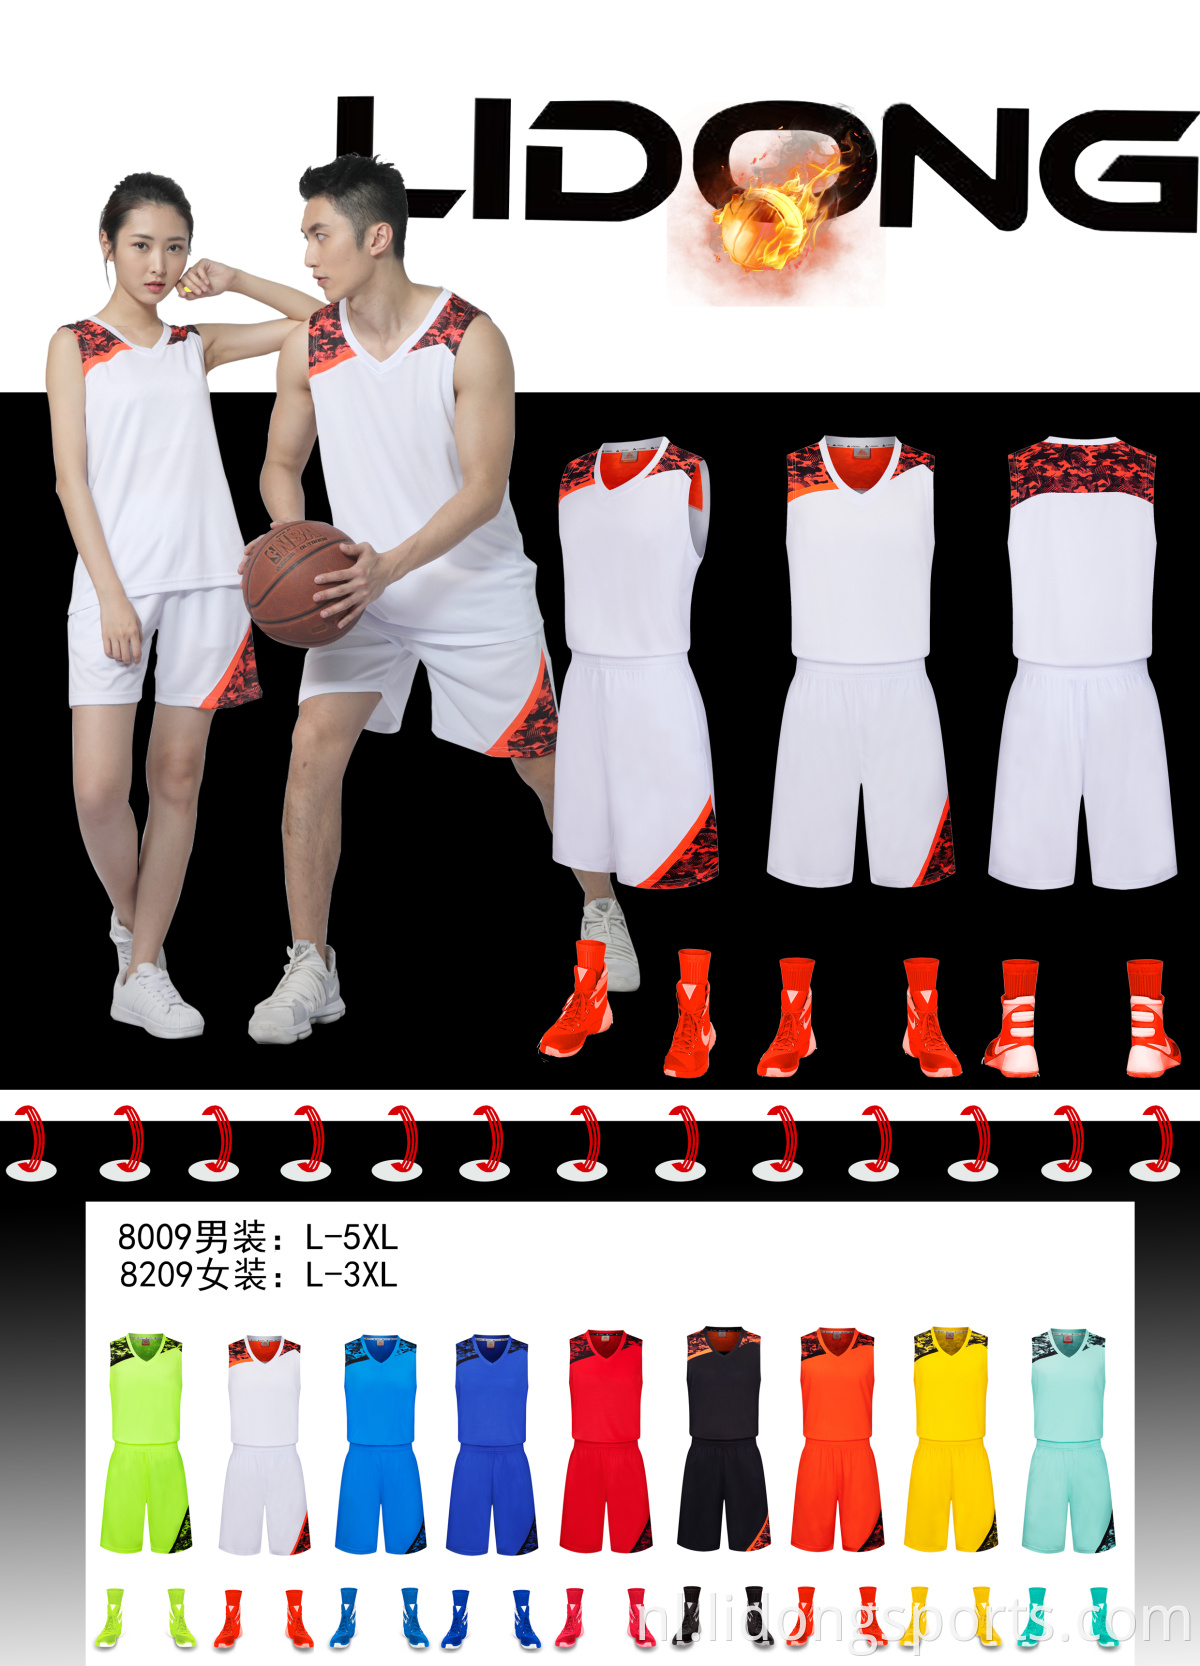 2021 Nieuwste basketbal jersey Design Color Green Basketball Jersey Uniform Design